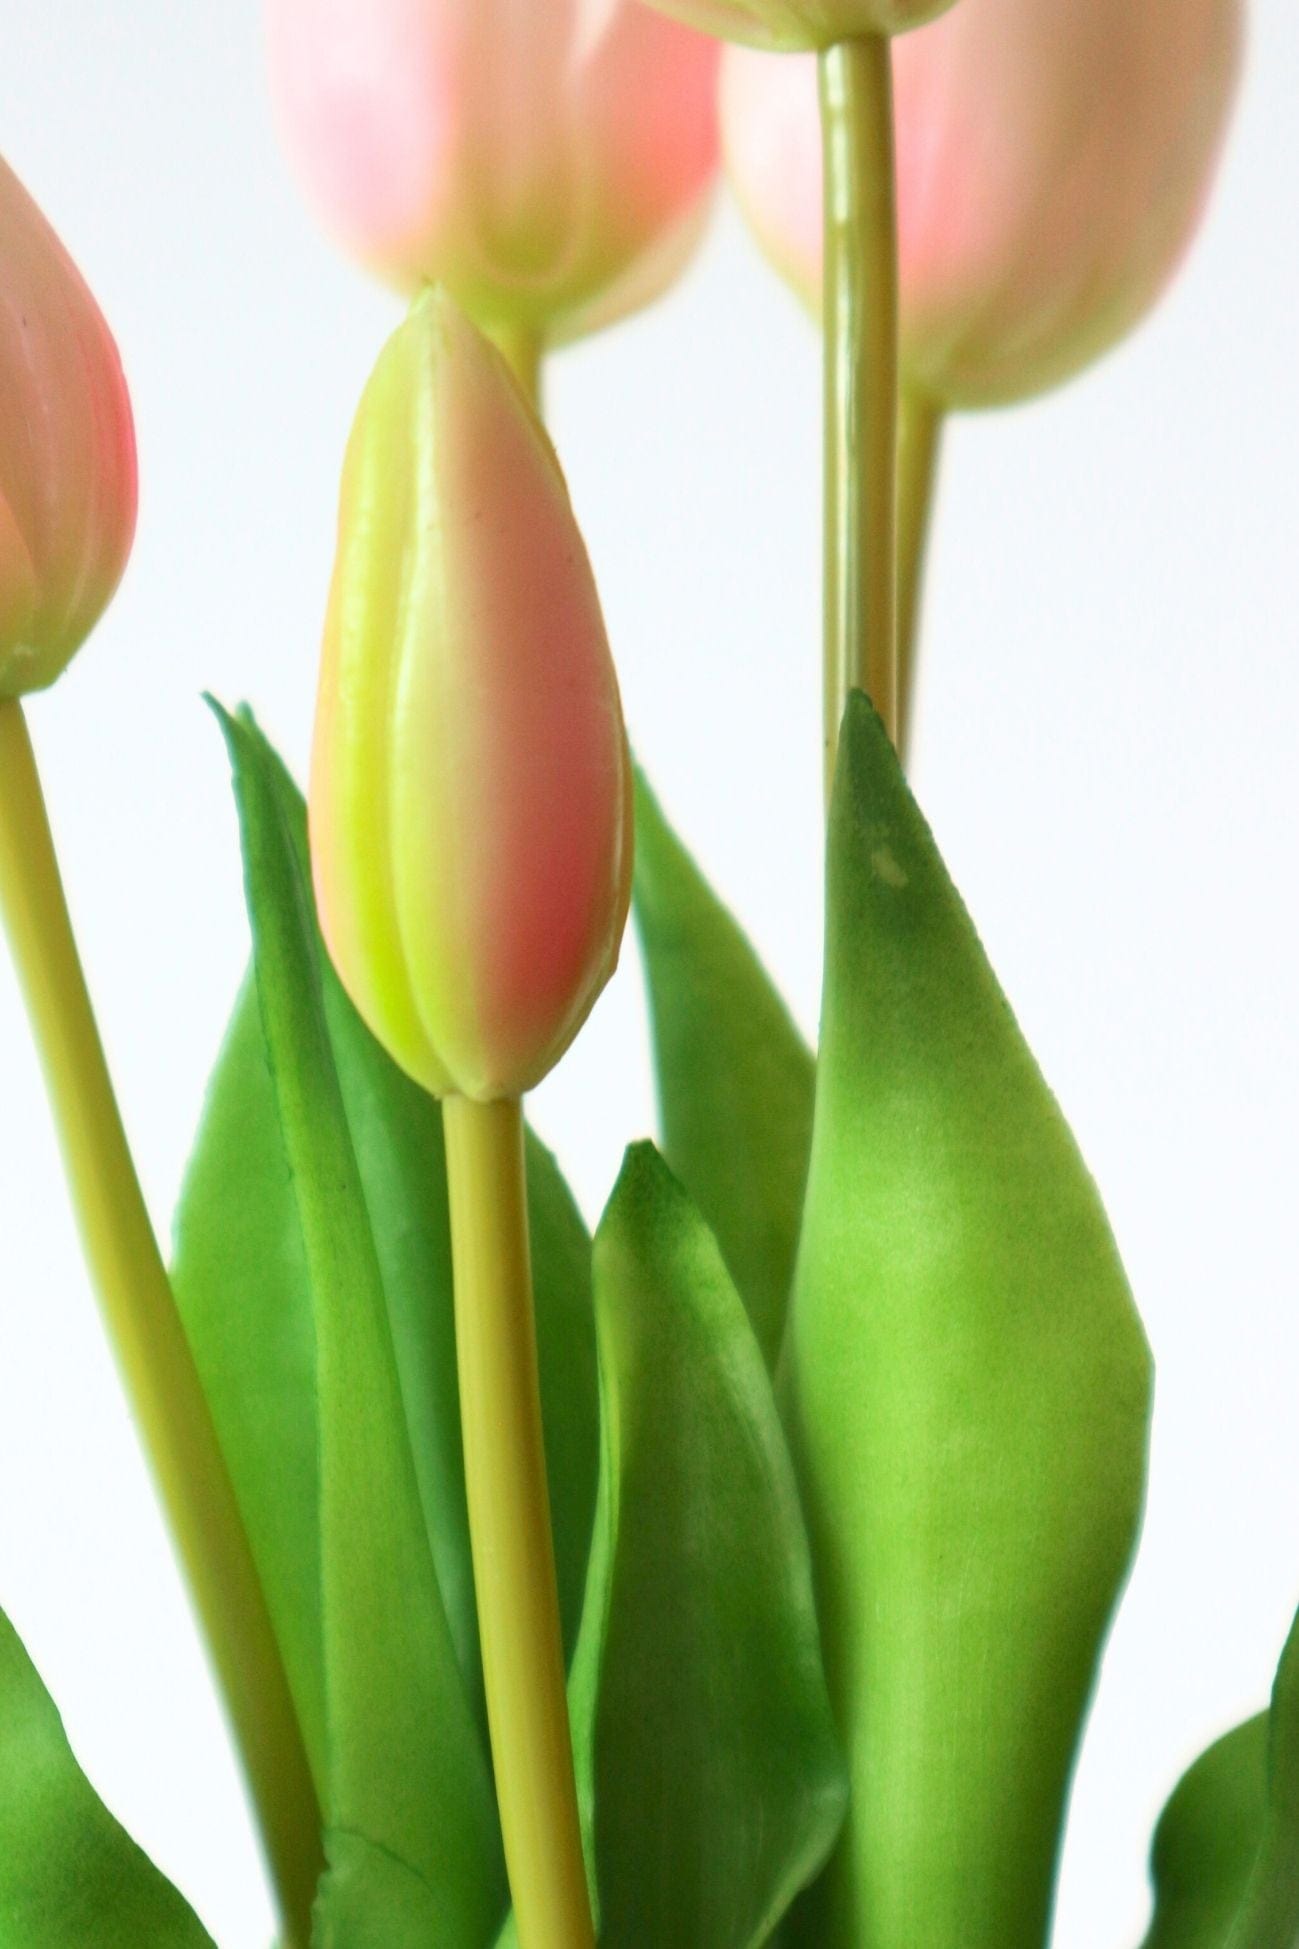 Jolipa Aletheia Aletheia - Mazzo di 5 tulipani artificiali color rosa 40 cm | Jolipa